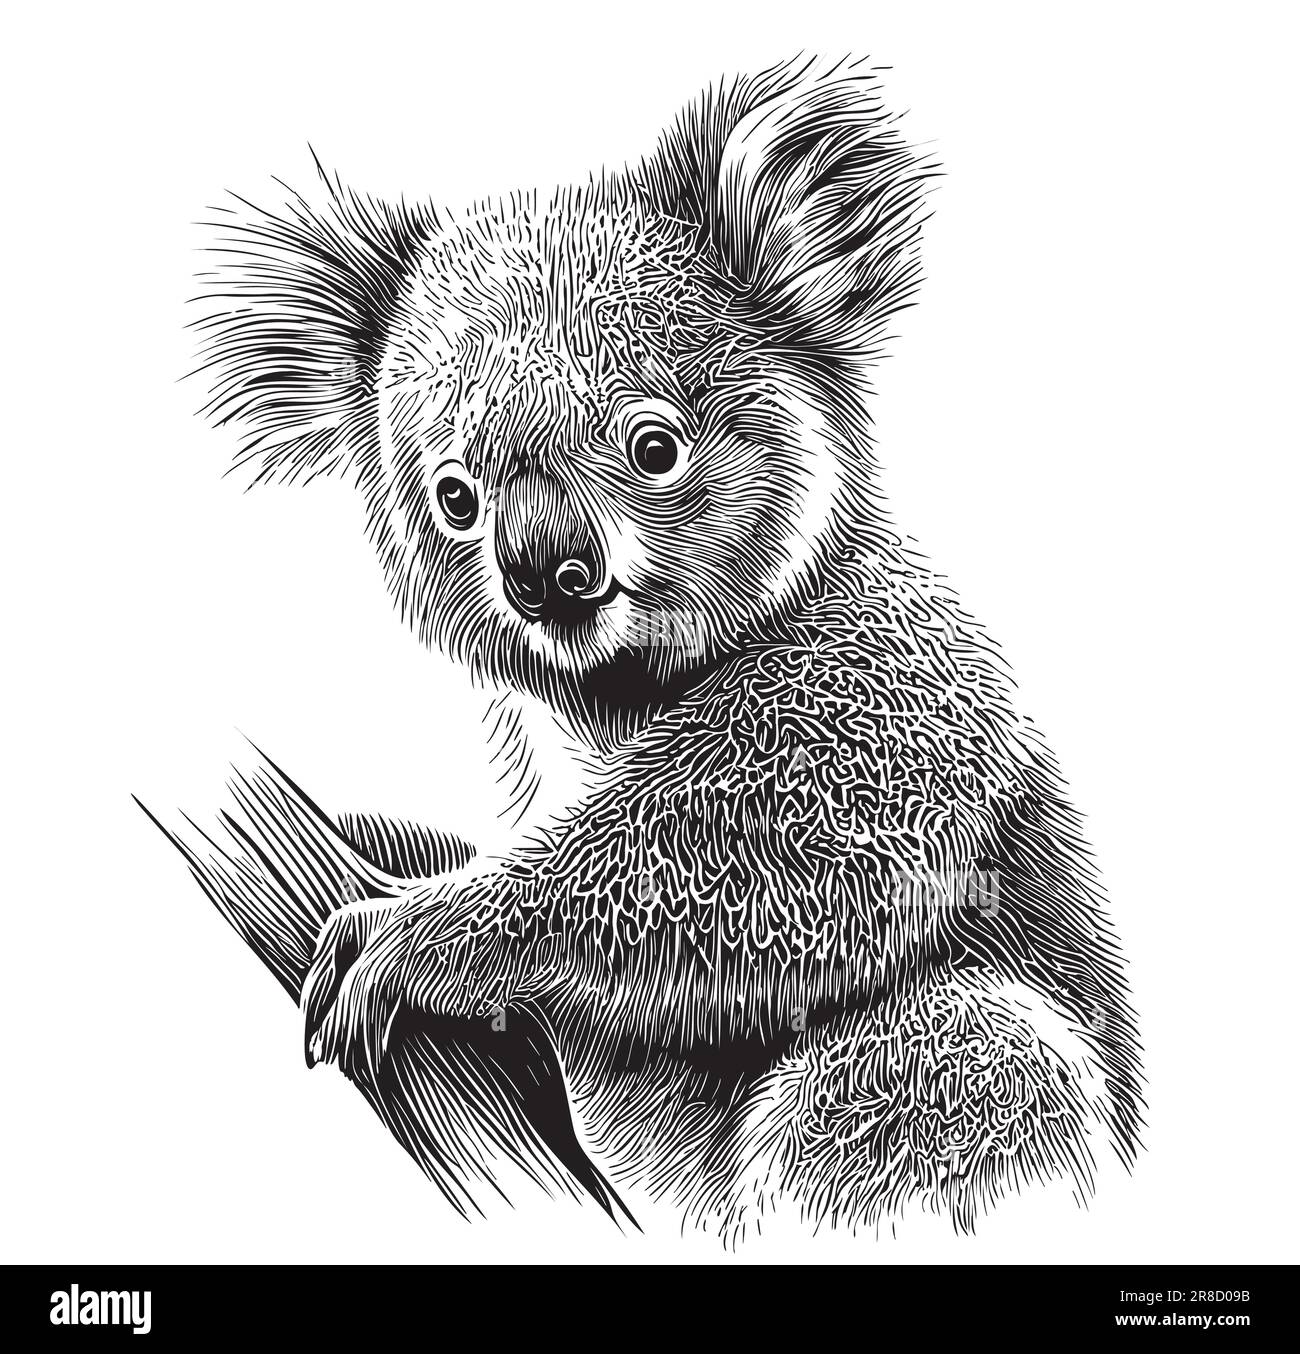 https://c8.alamy.com/comp/2R8D09B/koala-on-tree-hand-drawn-sketch-vector-illustration-wild-animals-2R8D09B.jpg